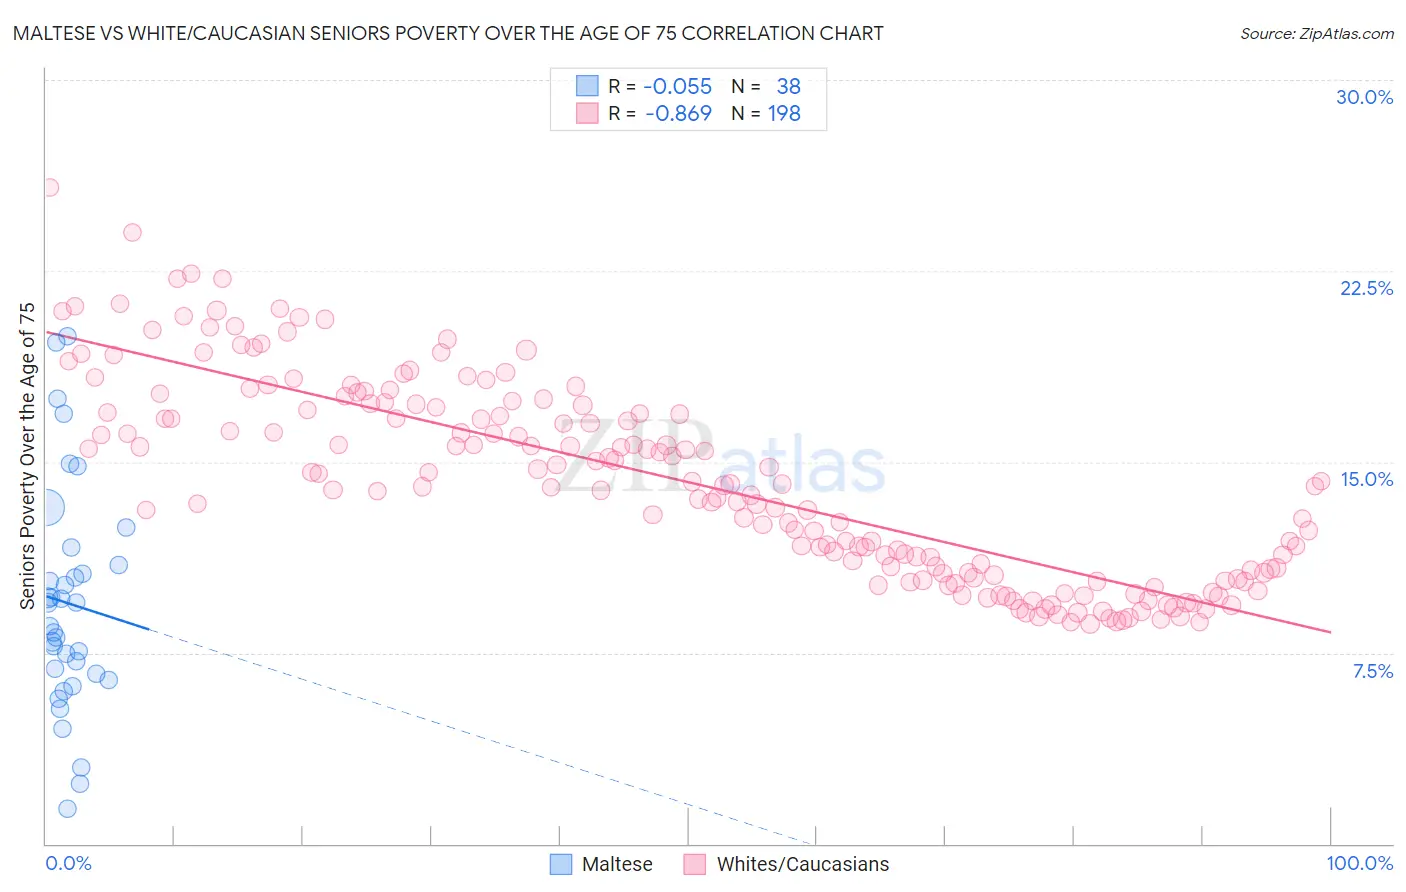 Maltese vs White/Caucasian Seniors Poverty Over the Age of 75